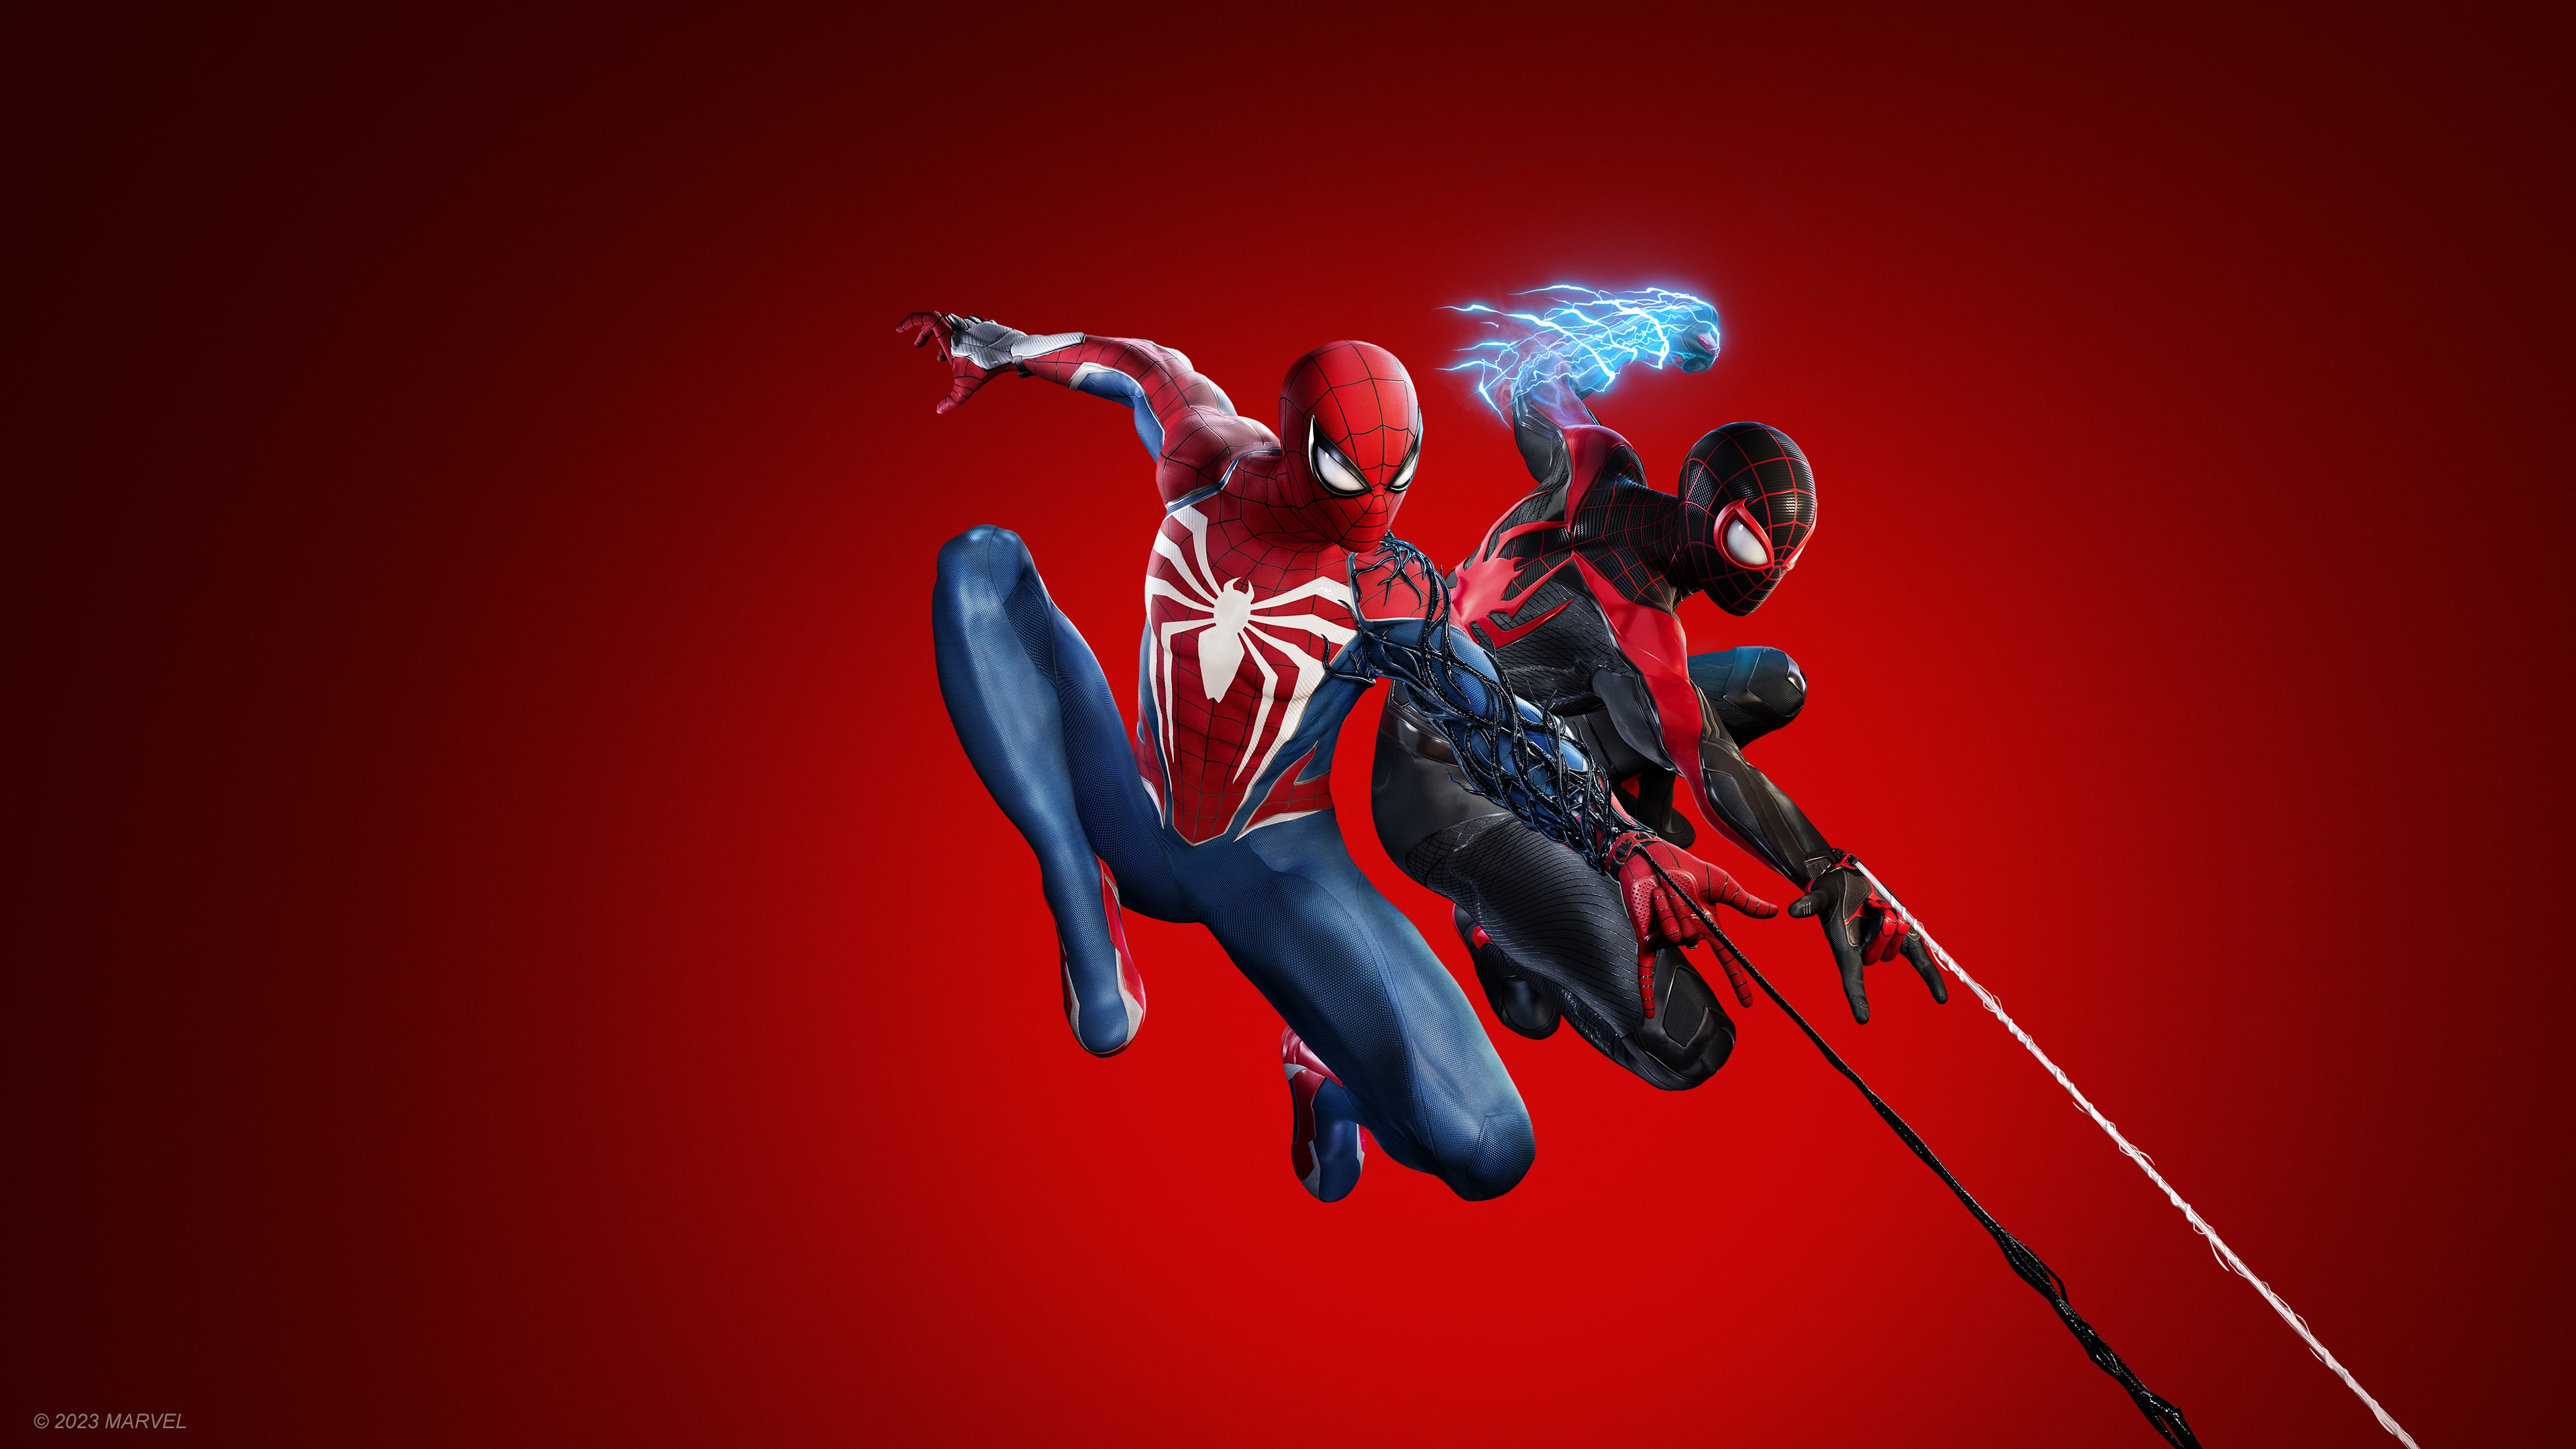 Marvel’s Spider-Man 2 Digital Deluxe Edition